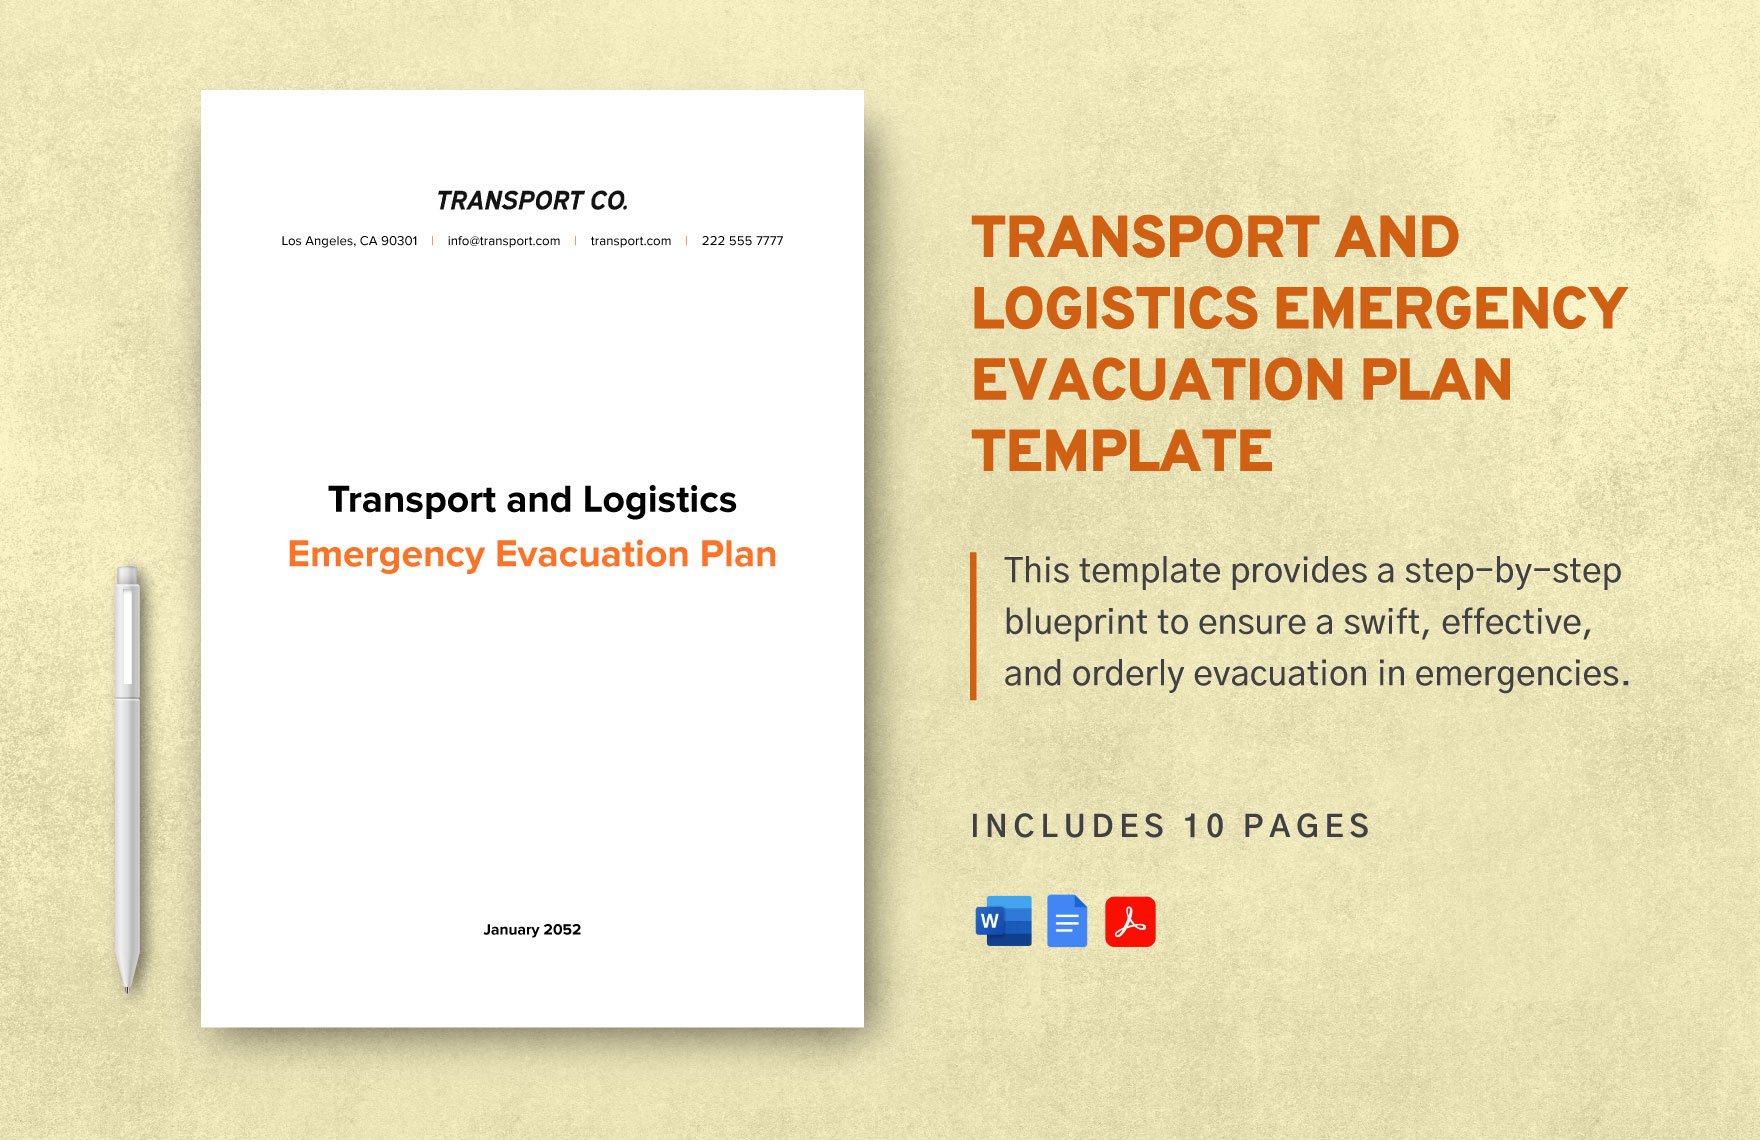 Transport and Logistics Emergency Evacuation Plan Template